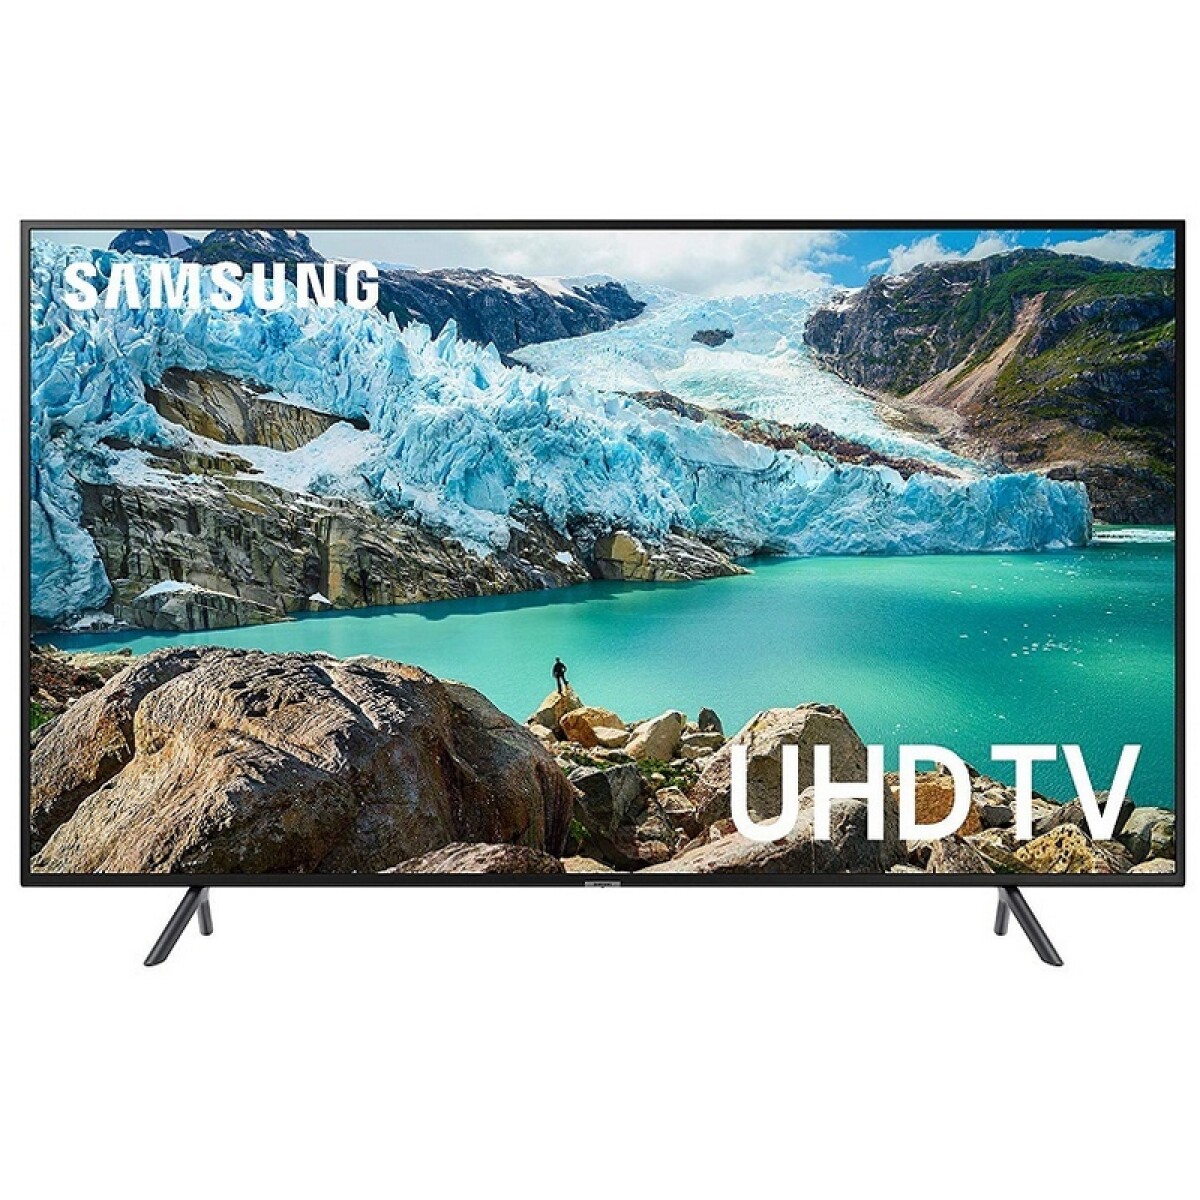 TV SAMSUNG - 43" LED SMART TV UHD 4K 